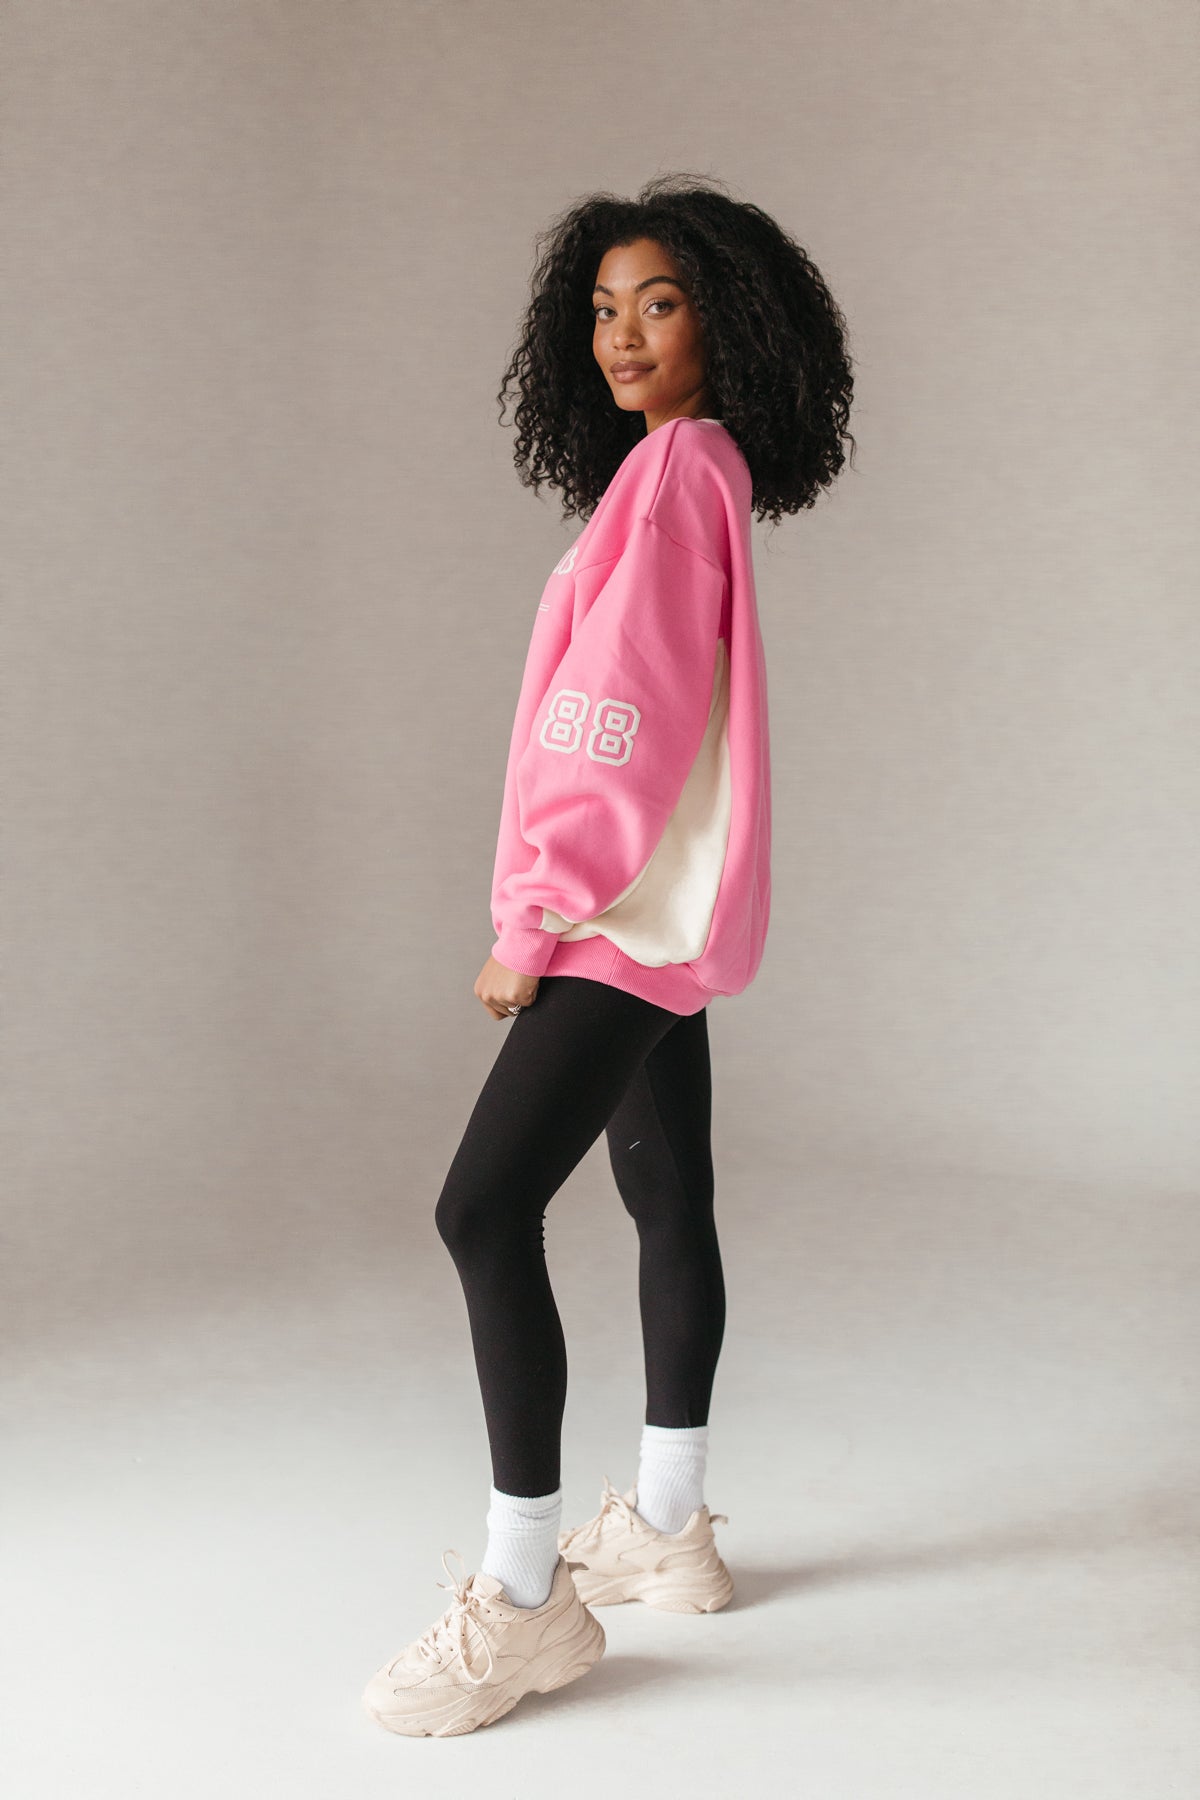 Sports Club Sweatshirt, alternate, color, Pink